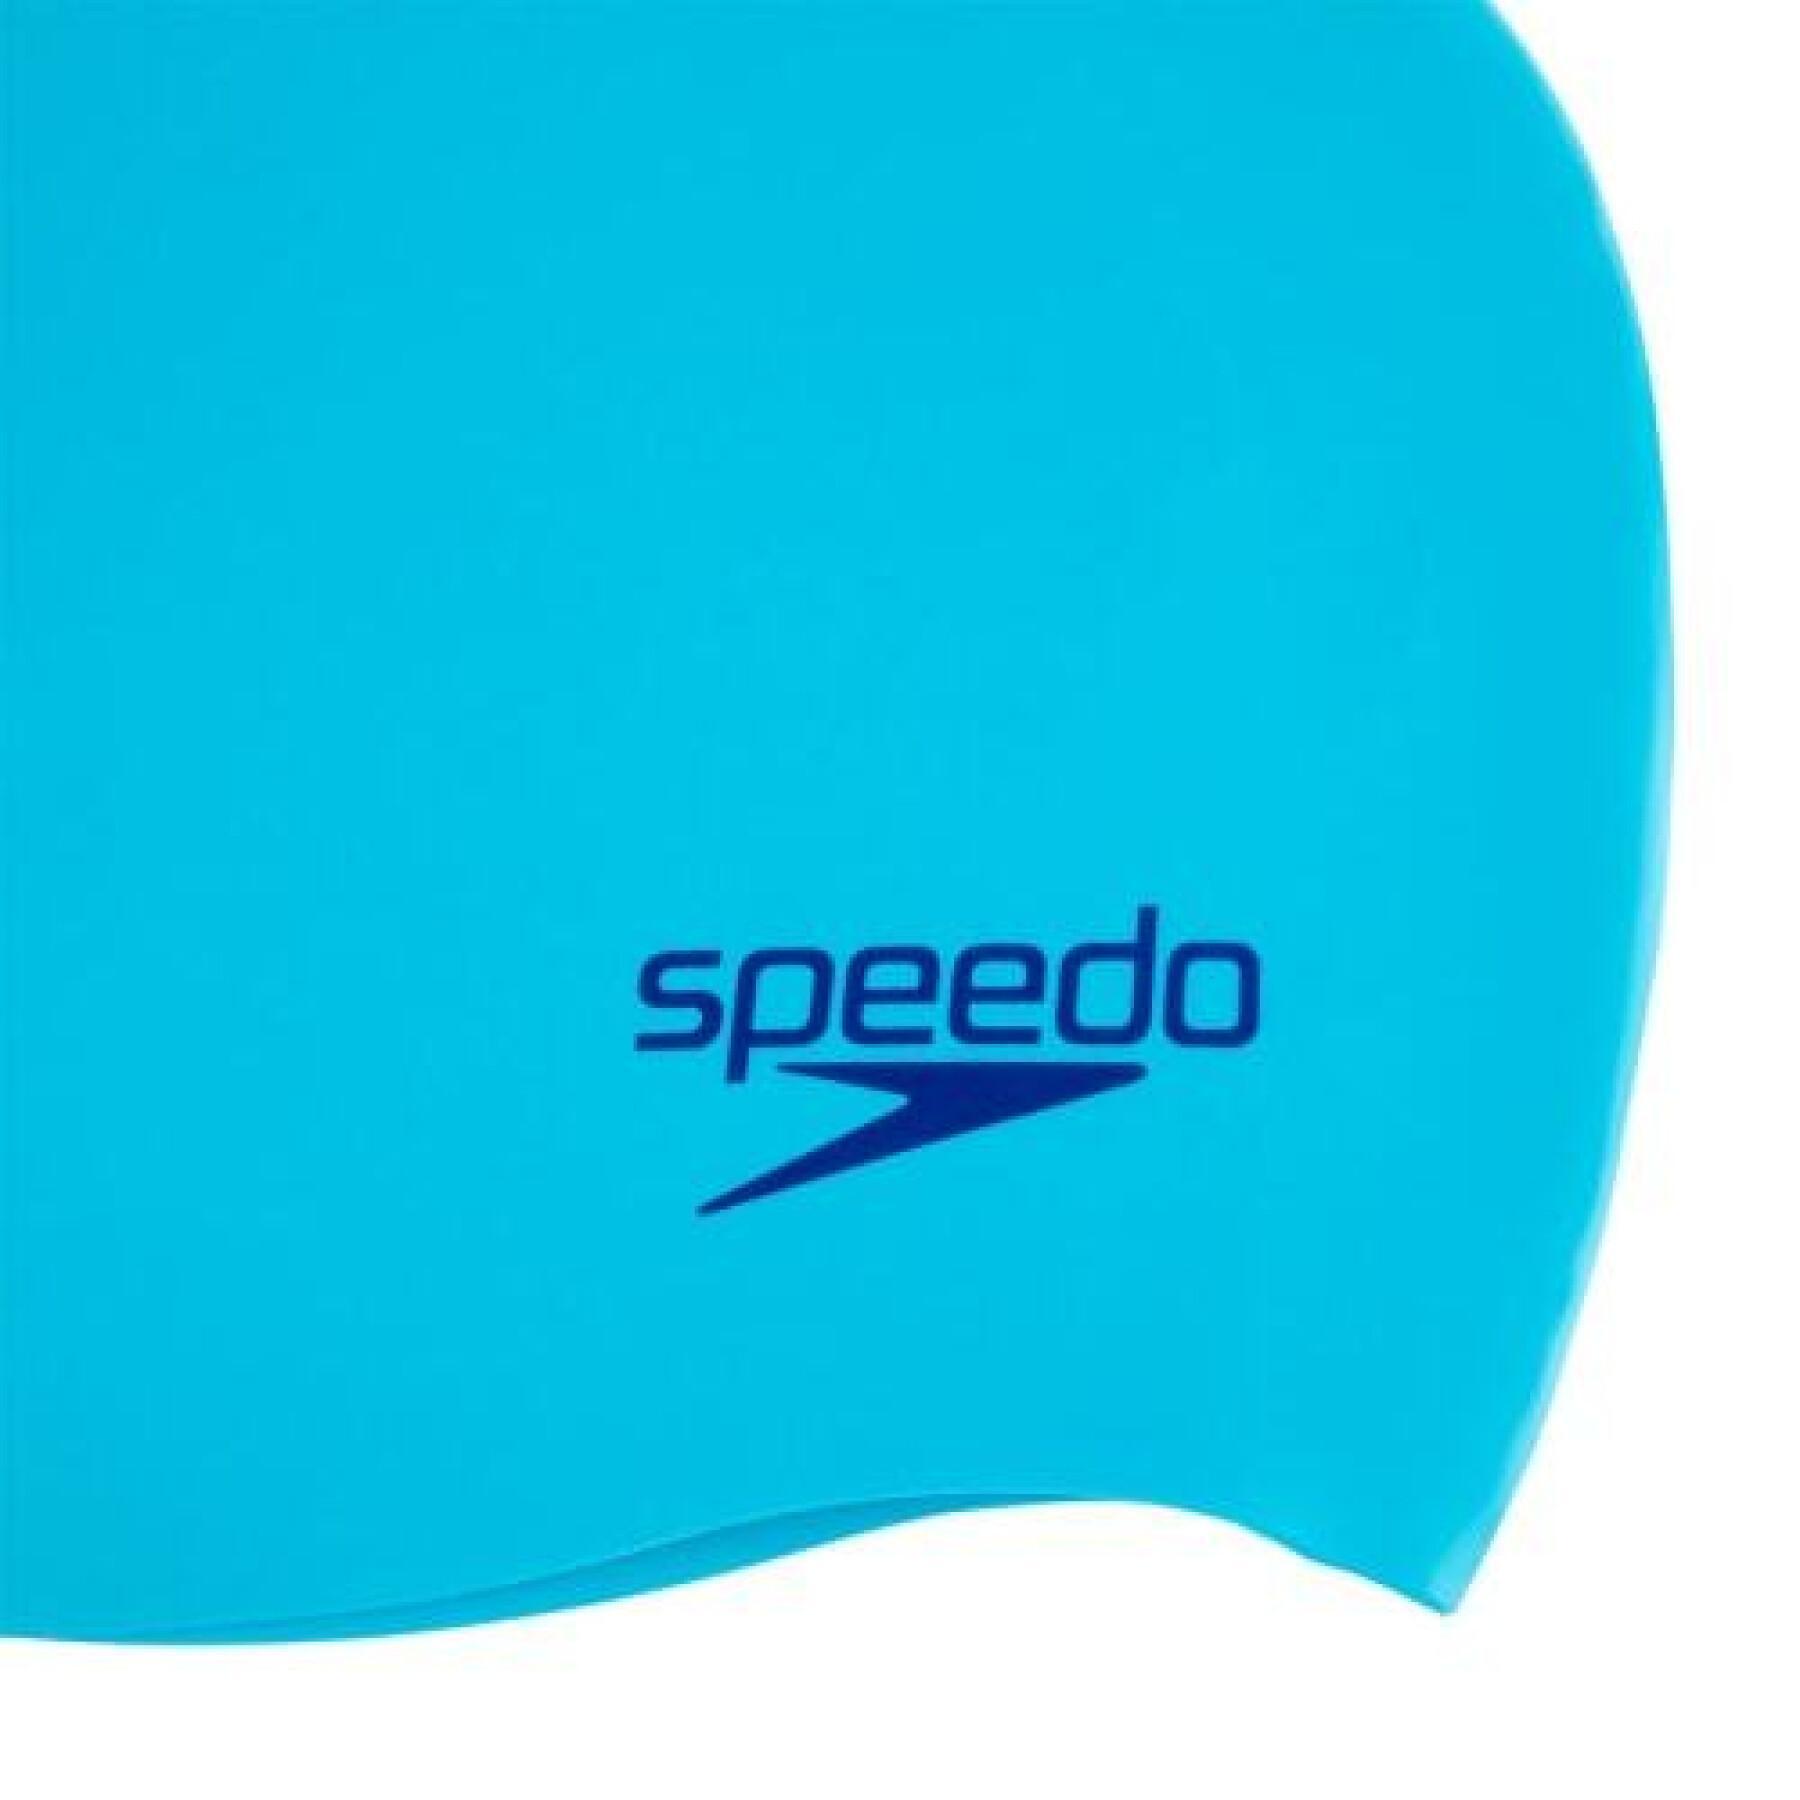 Silicone molded bathing cap for children Speedo P12